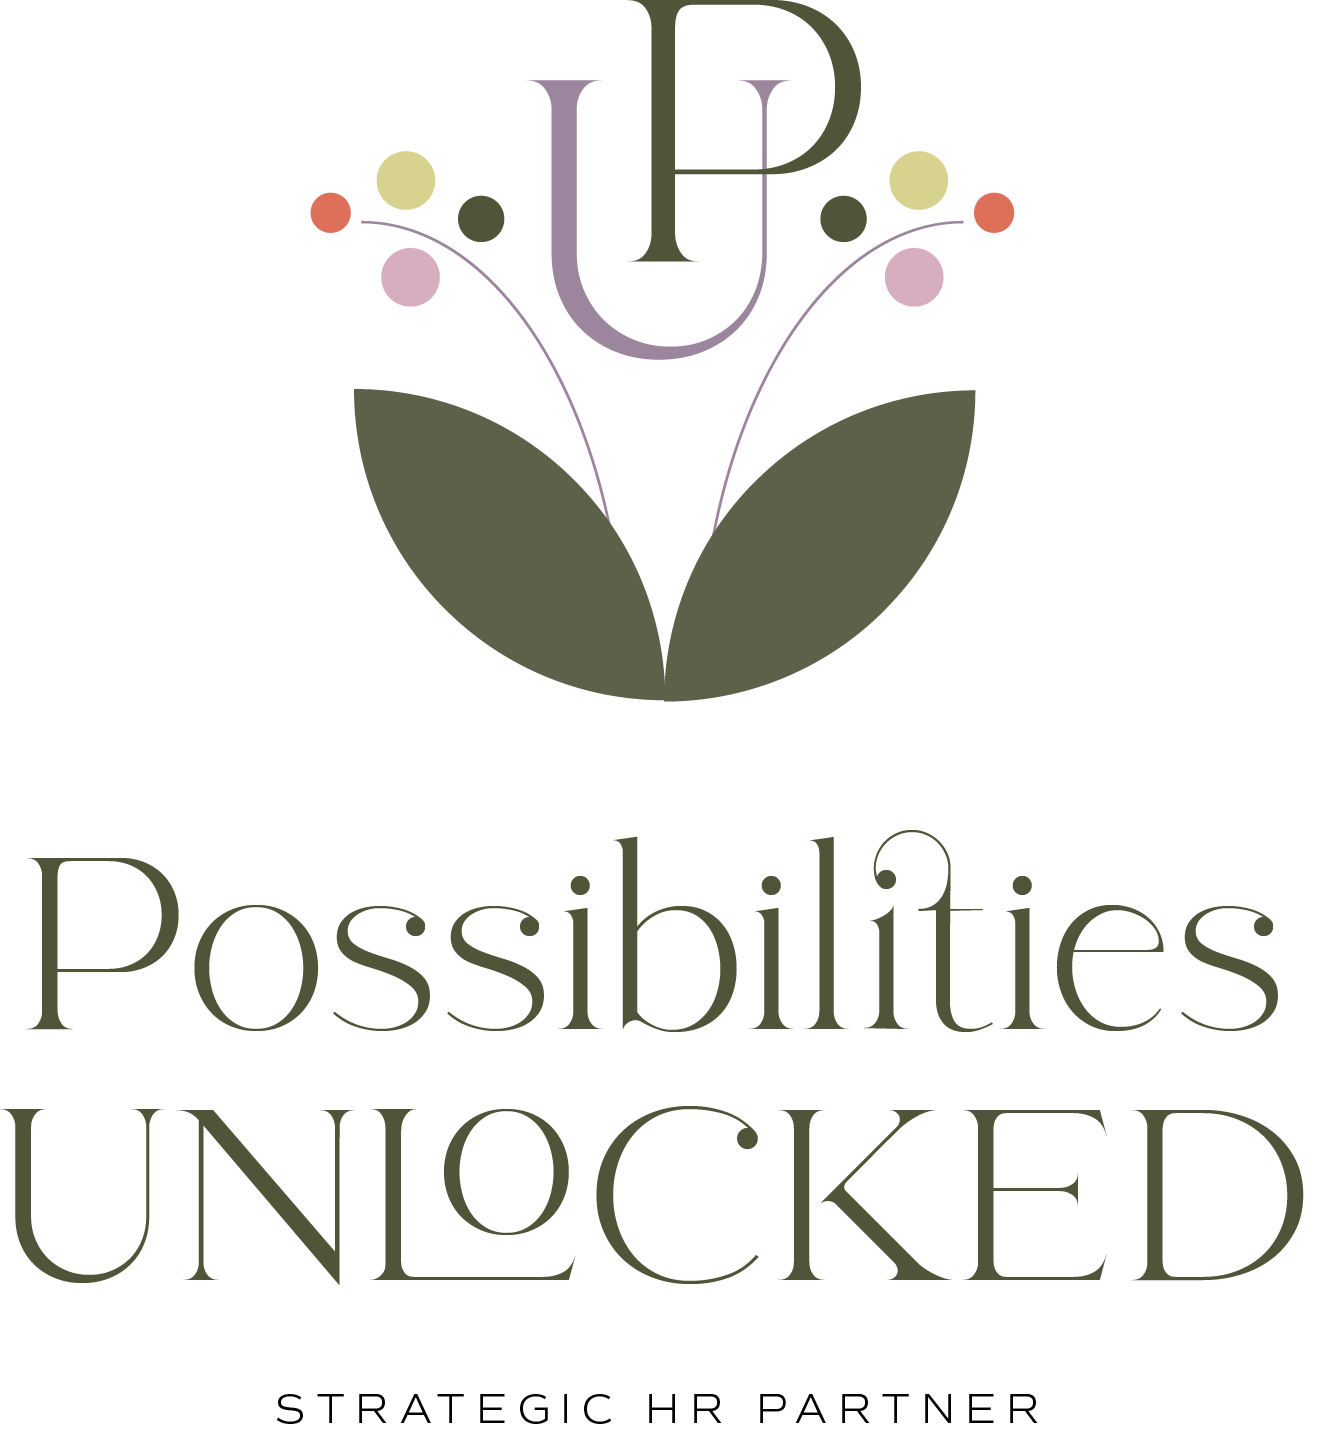 Possibilities Unlocked | Your Strategic HR Partner